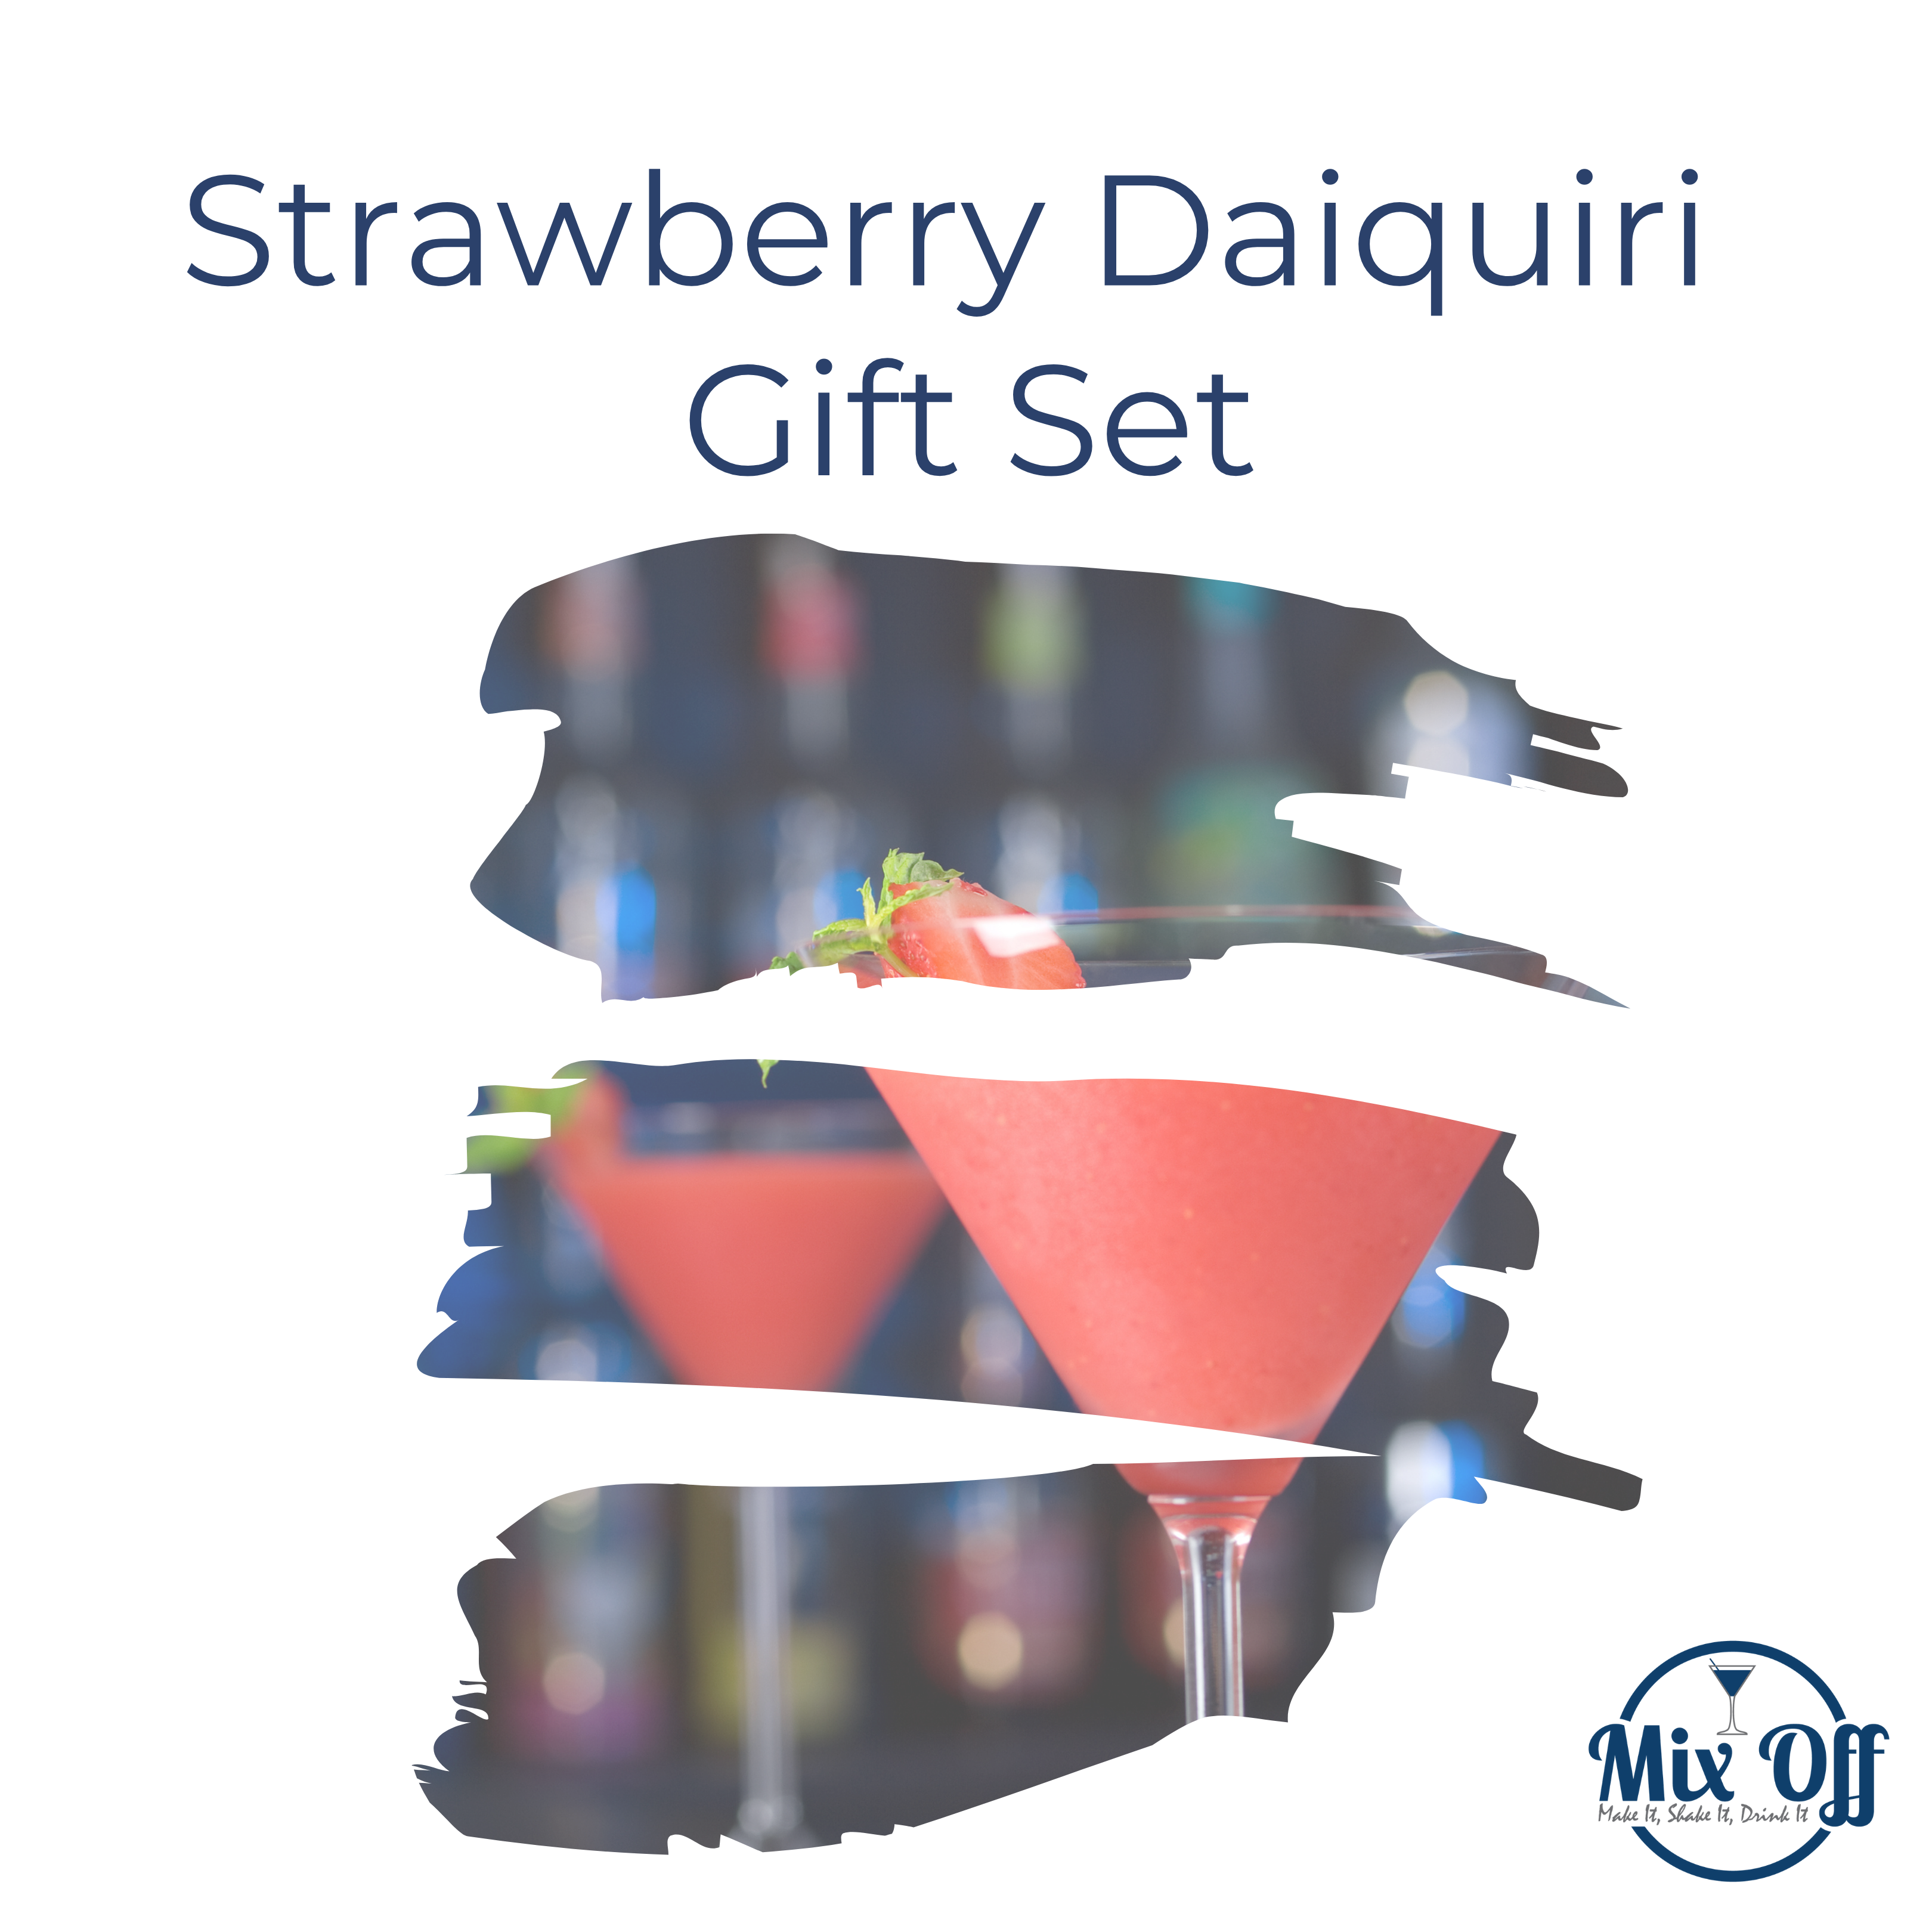 Strawberry Daiquiri Gift Set